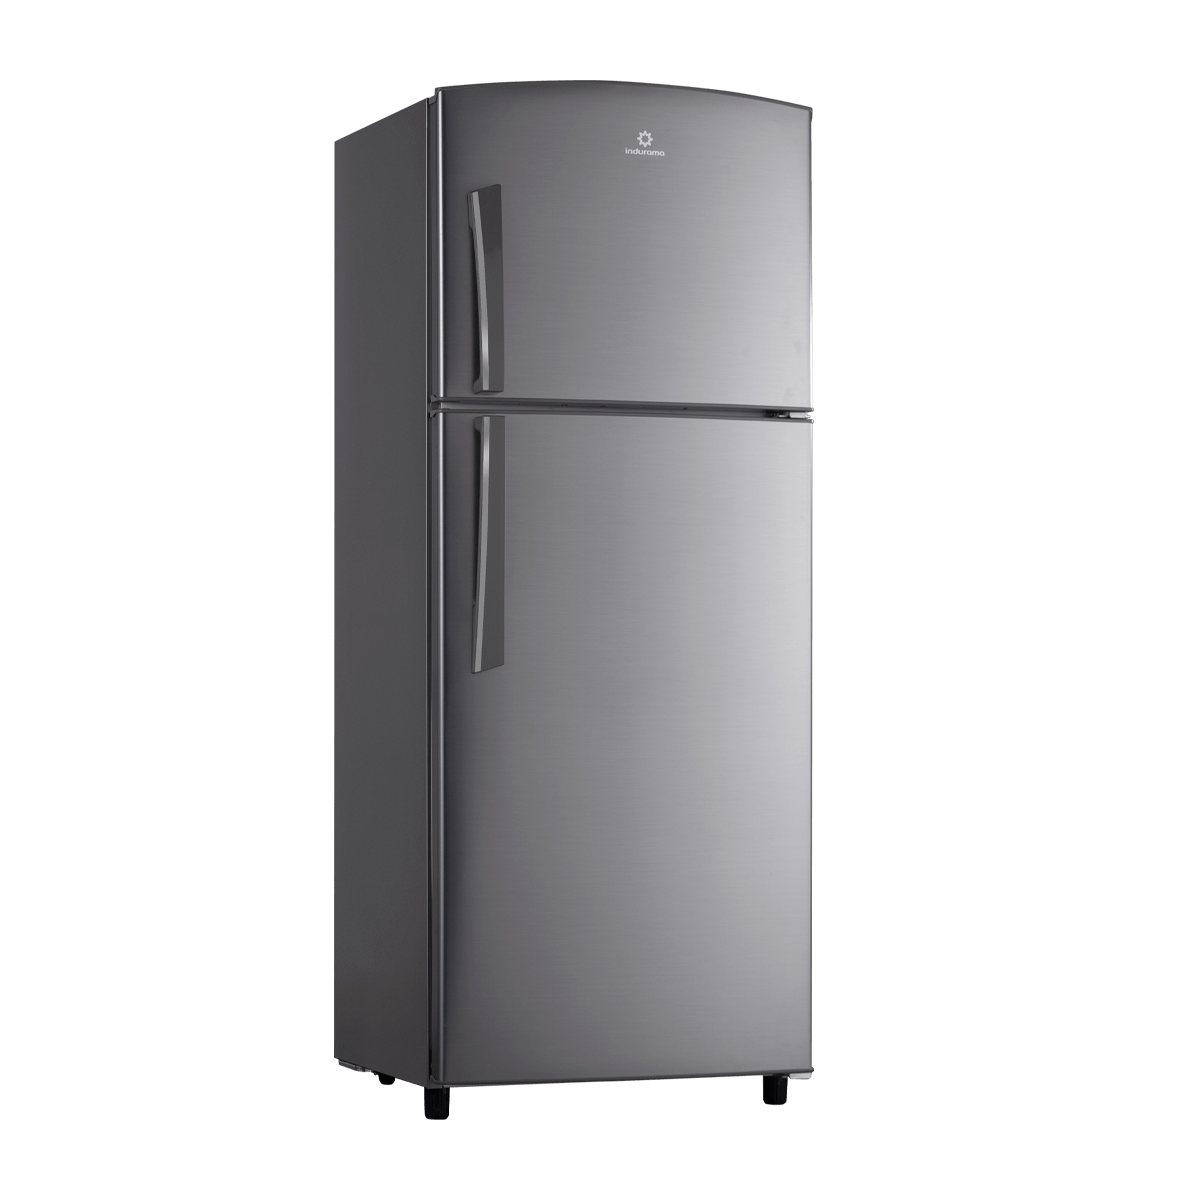 CBelectro - Refrigerador Indurama 12 pies Cromada Modelo RI-375